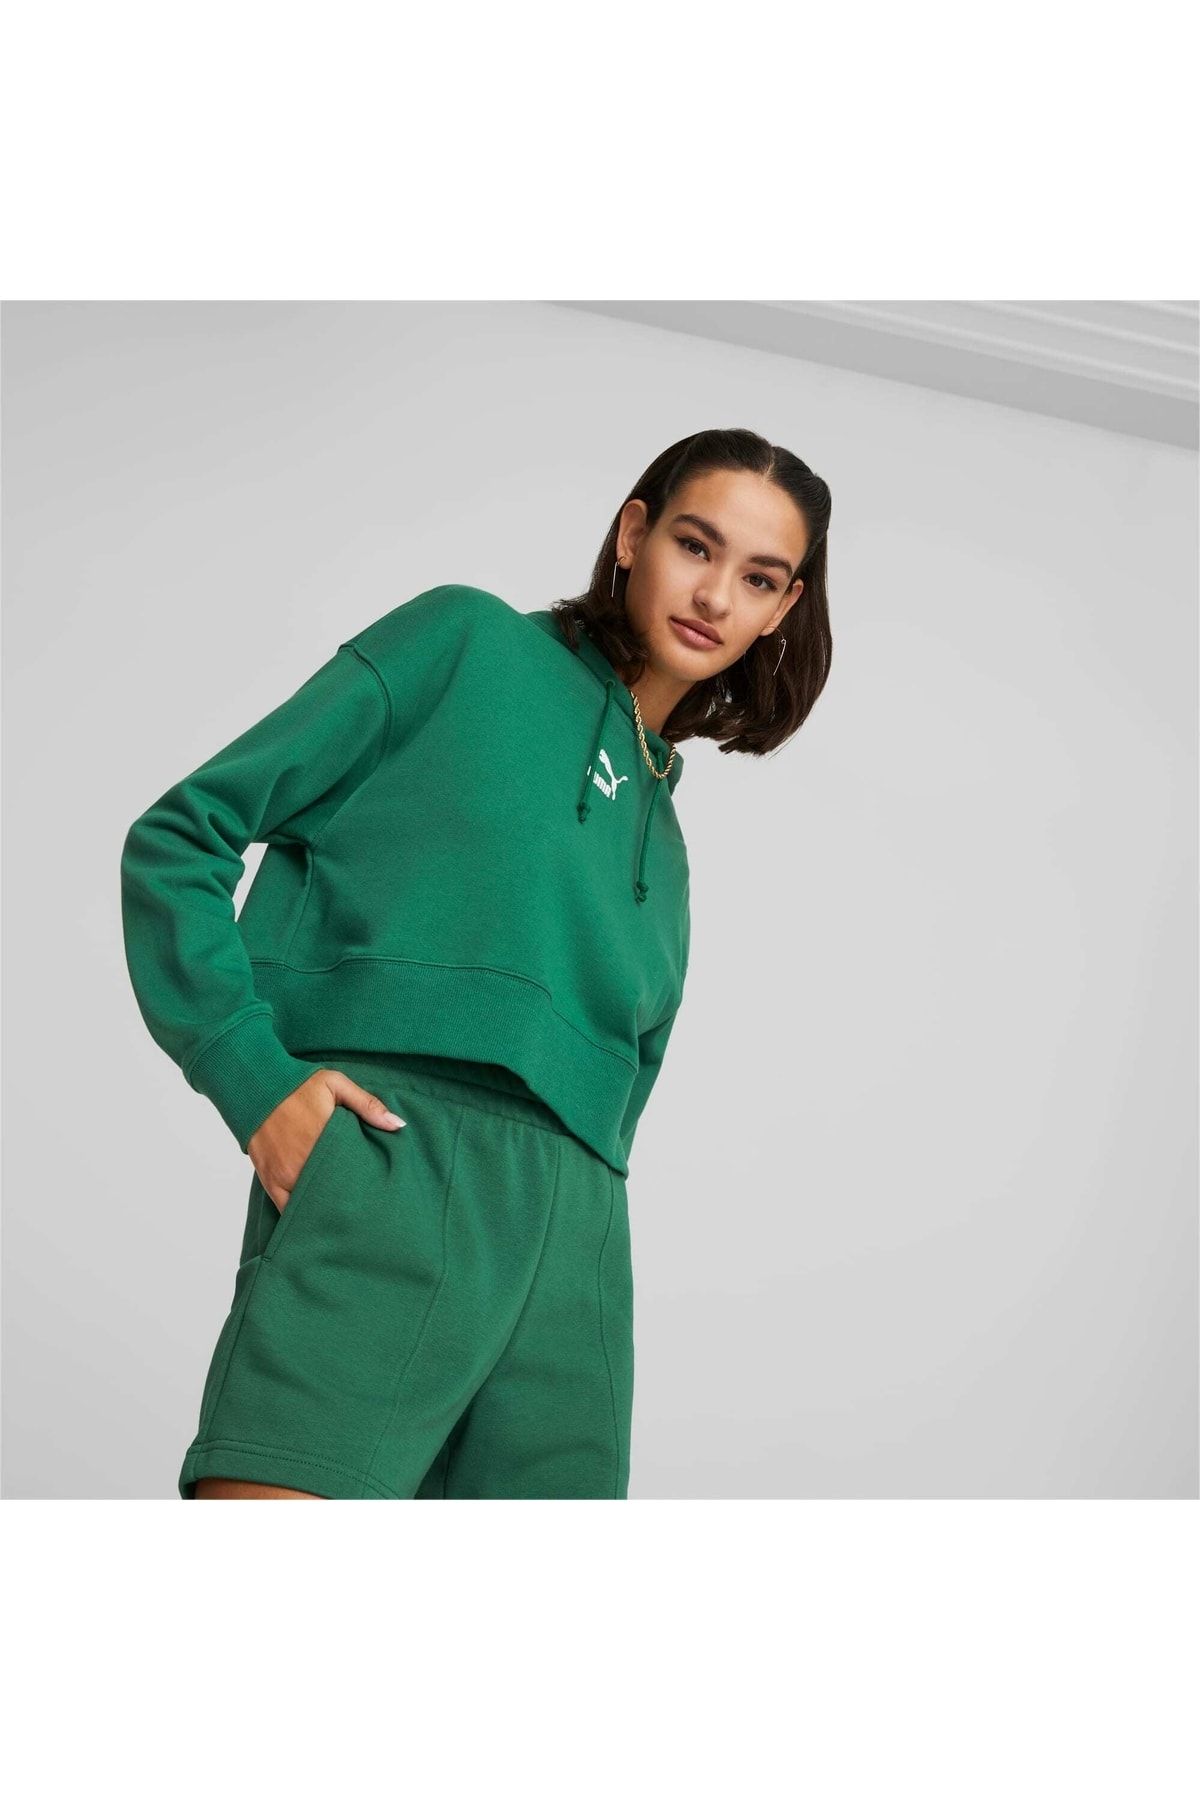 Puma Classics Cropped Yeşil Sweatshirt (538057-37)